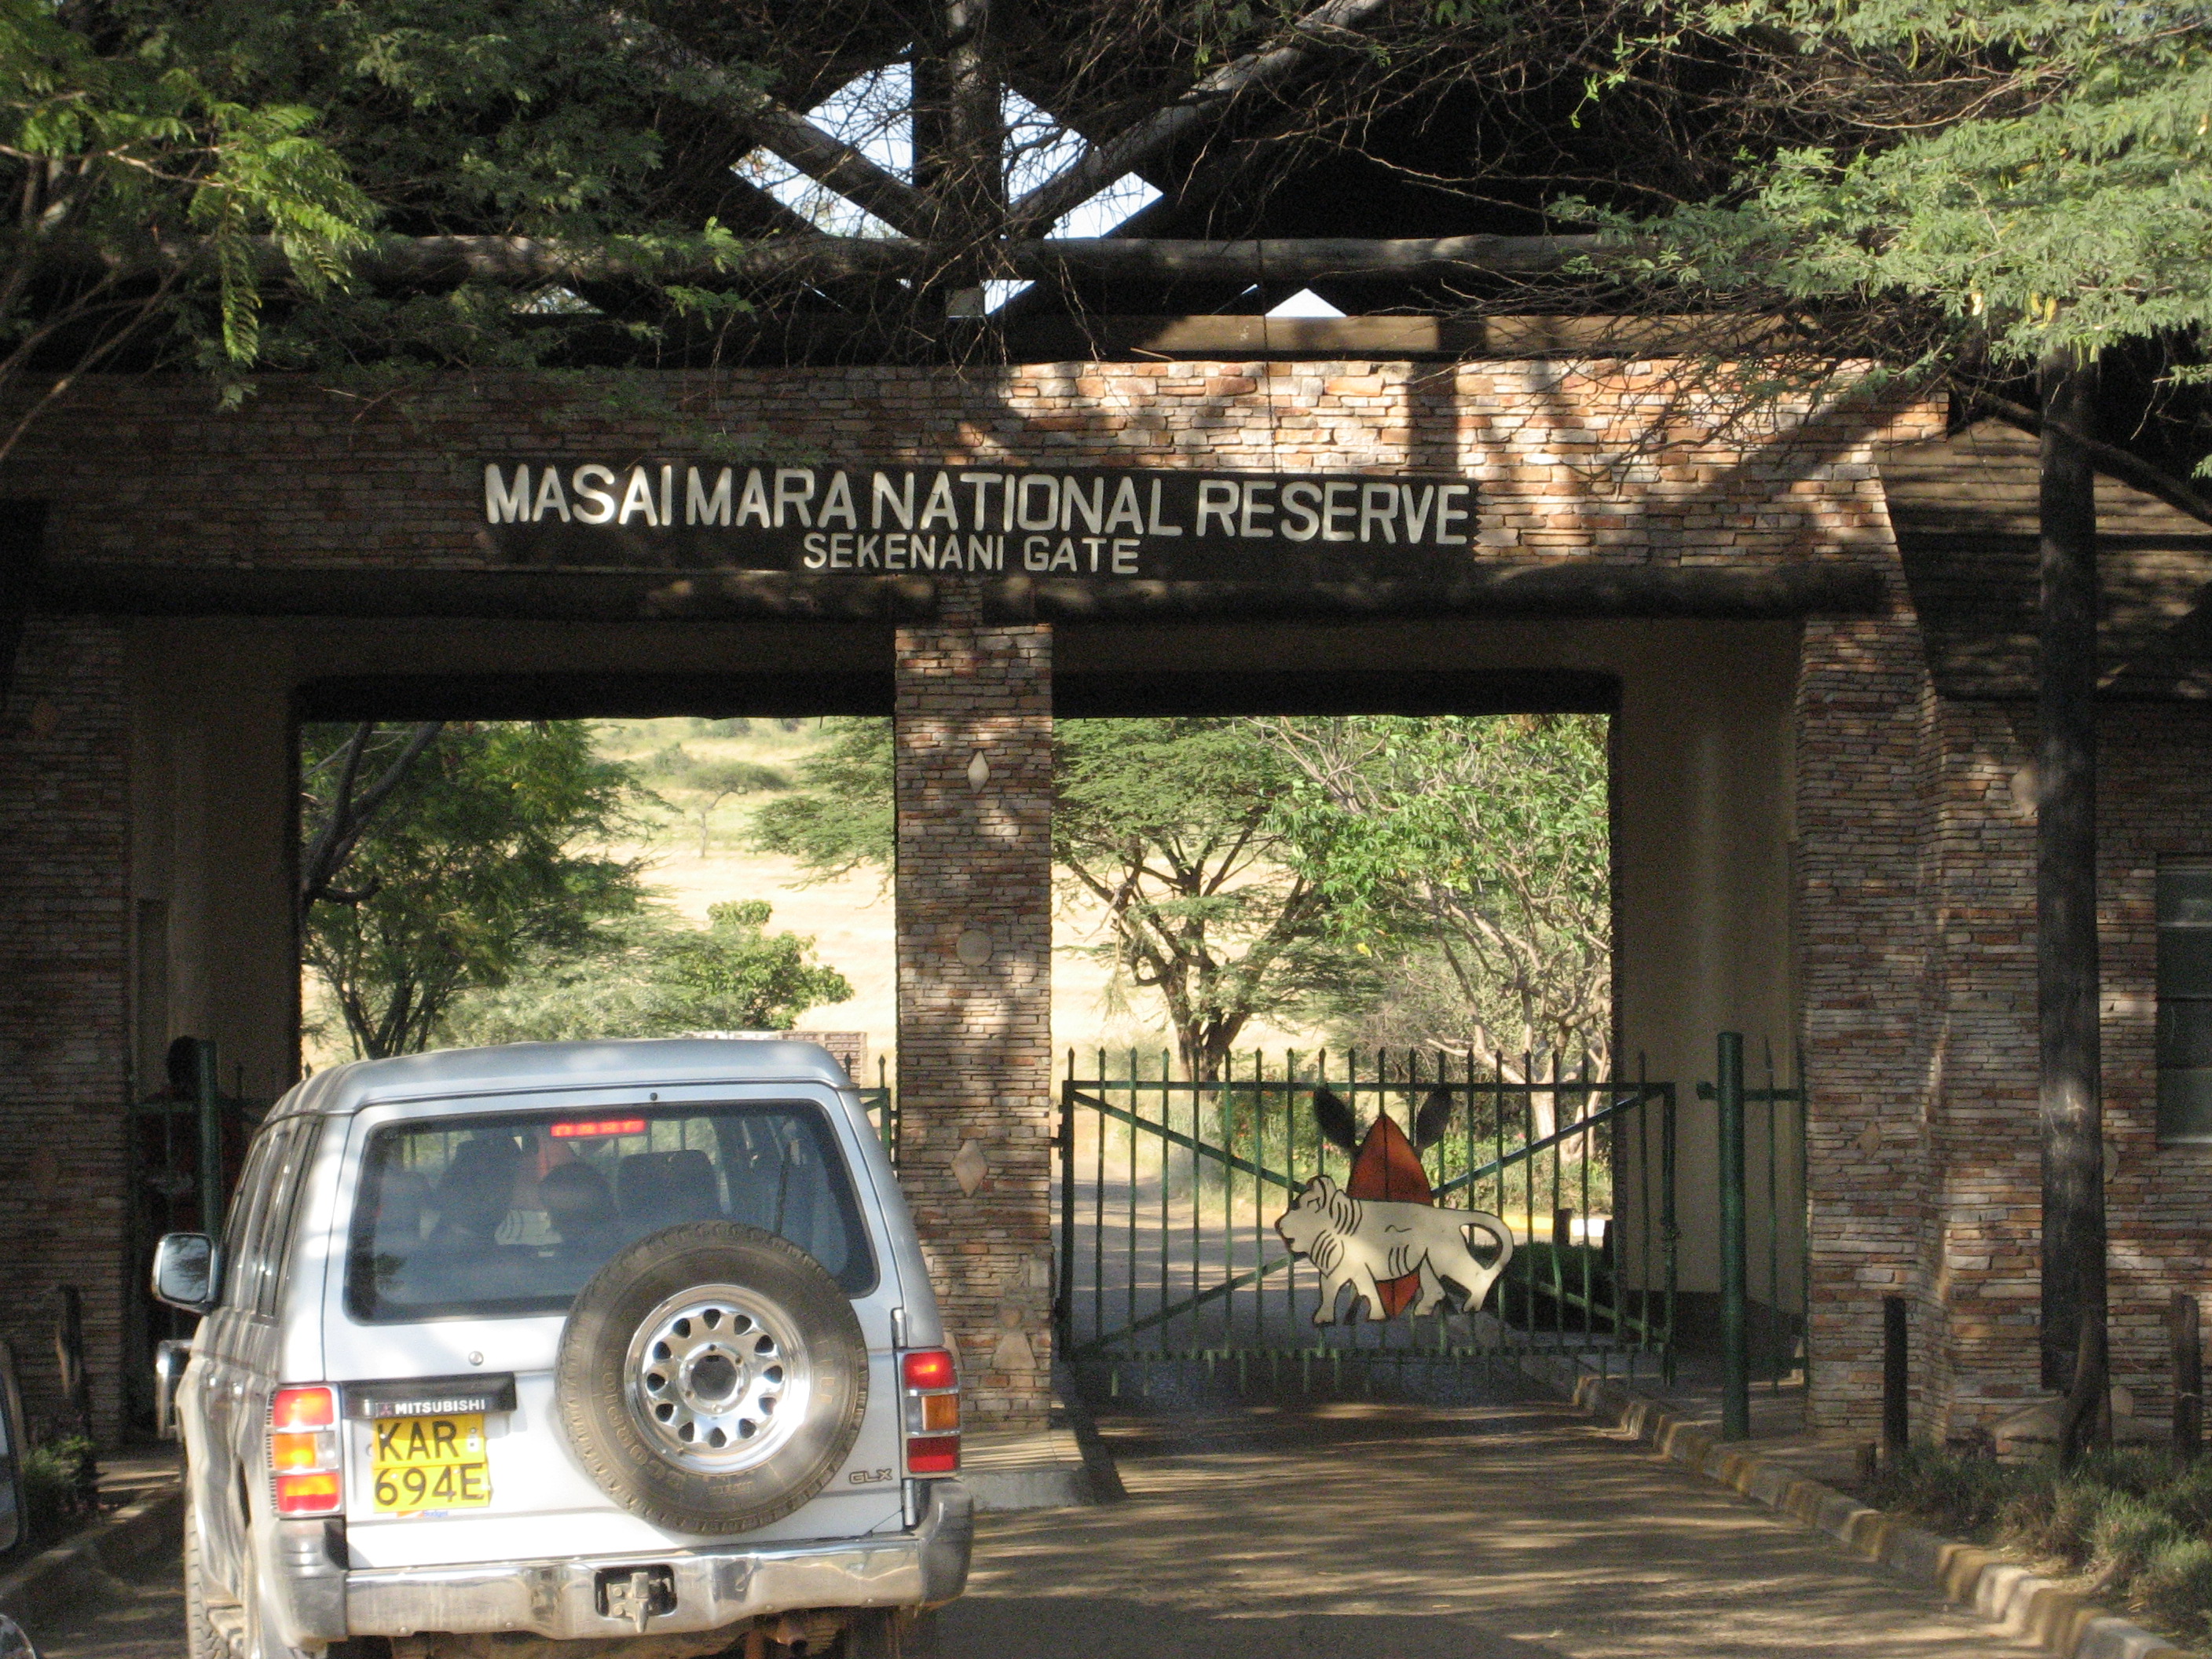 Sekenani Gate - Main Entrance to the Masai Mara.